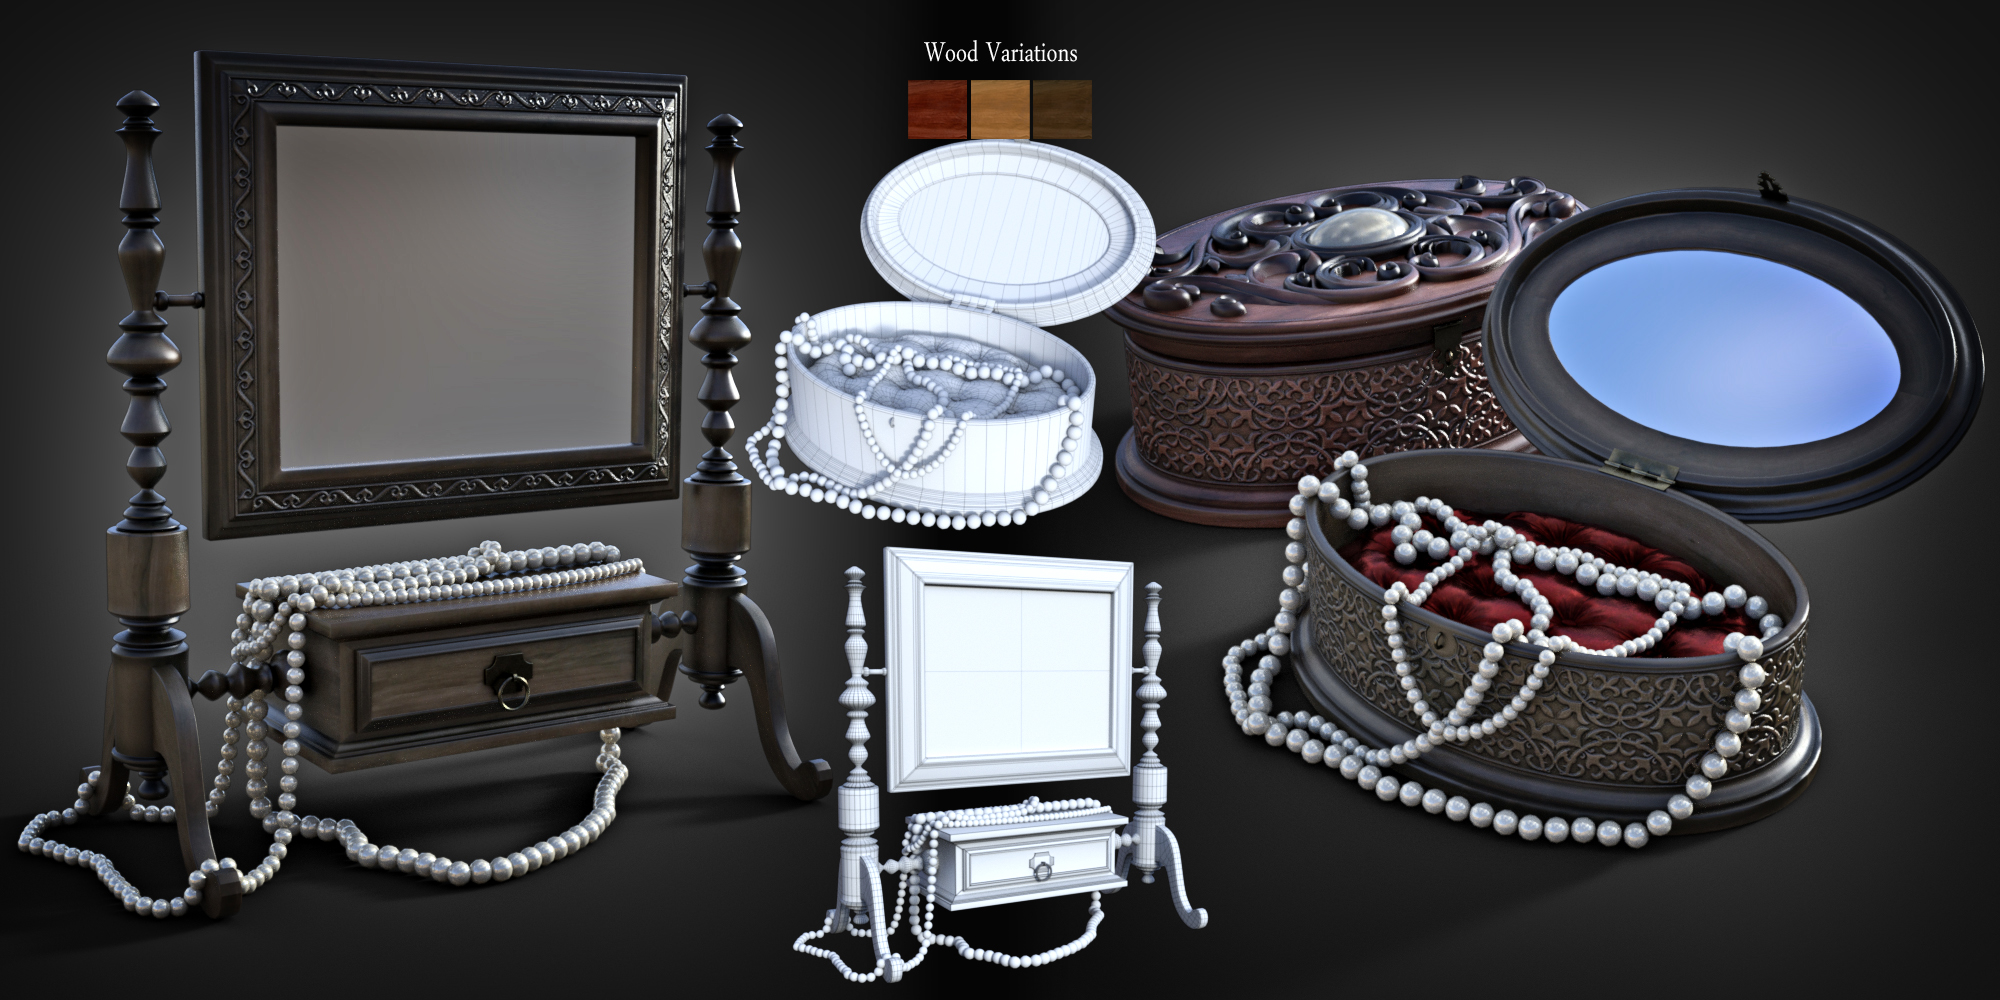 B.E.T.T.Y. Classic Jewelry Boxes by: B.E.T.T.Y, 3D Models by Daz 3D